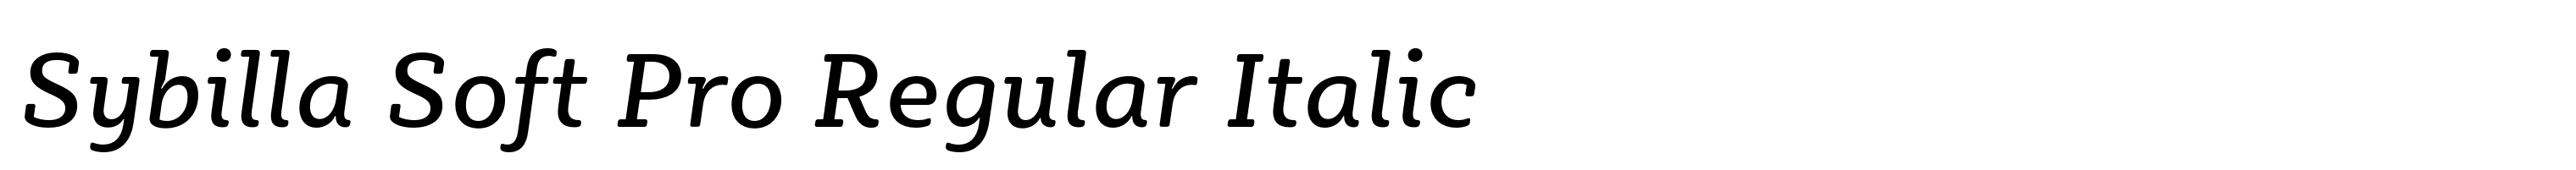 Sybilla Soft Pro Regular Italic